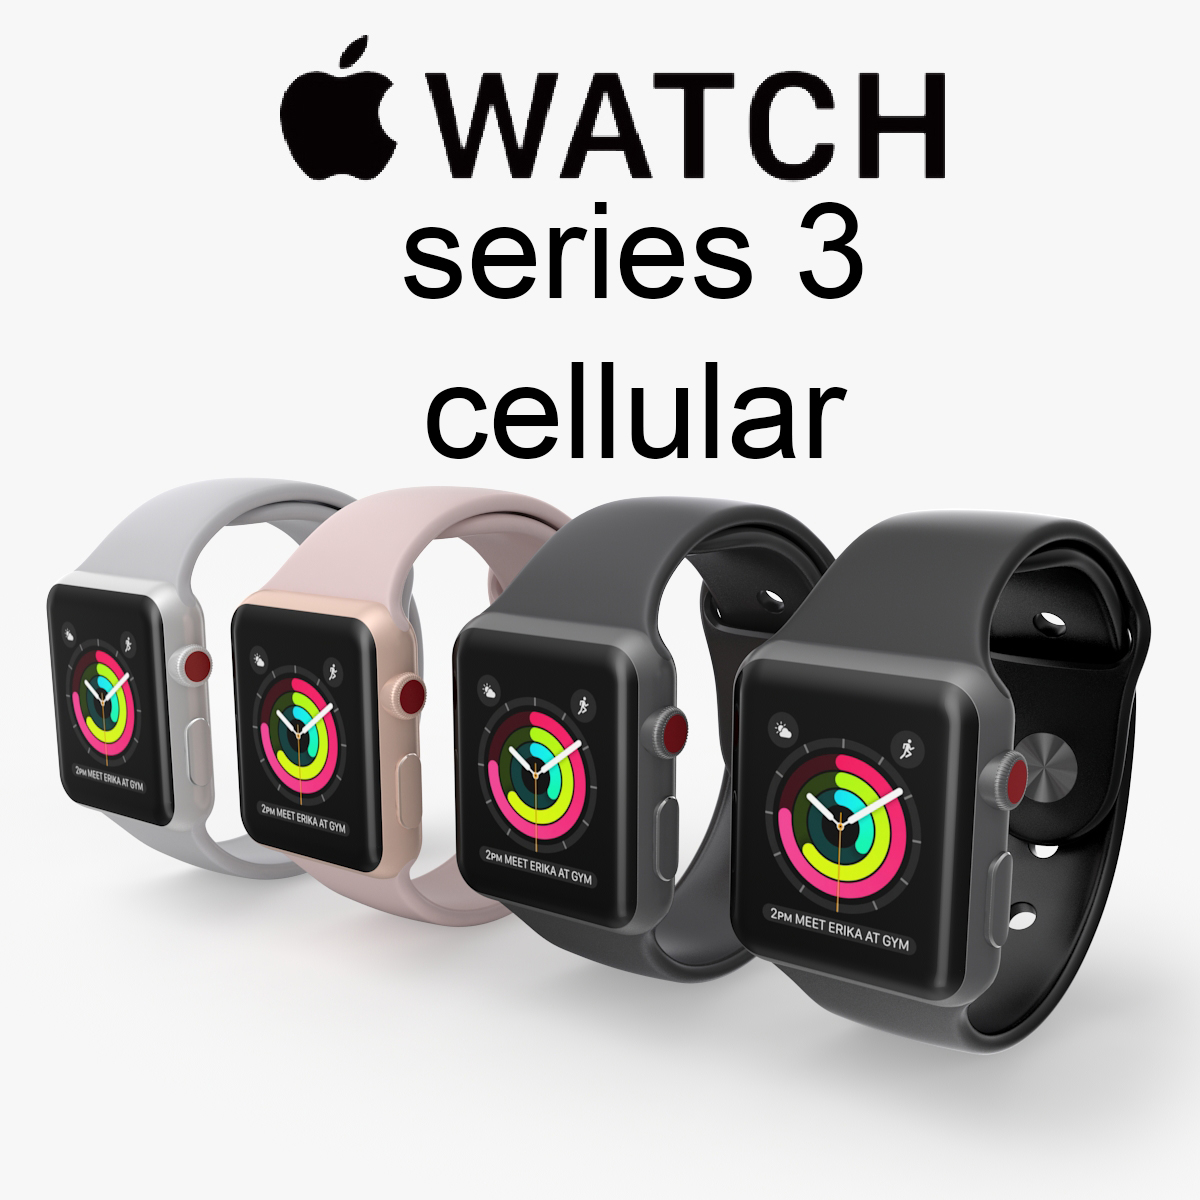 Apple watch cellular series 3D - TurboSquid 1215189